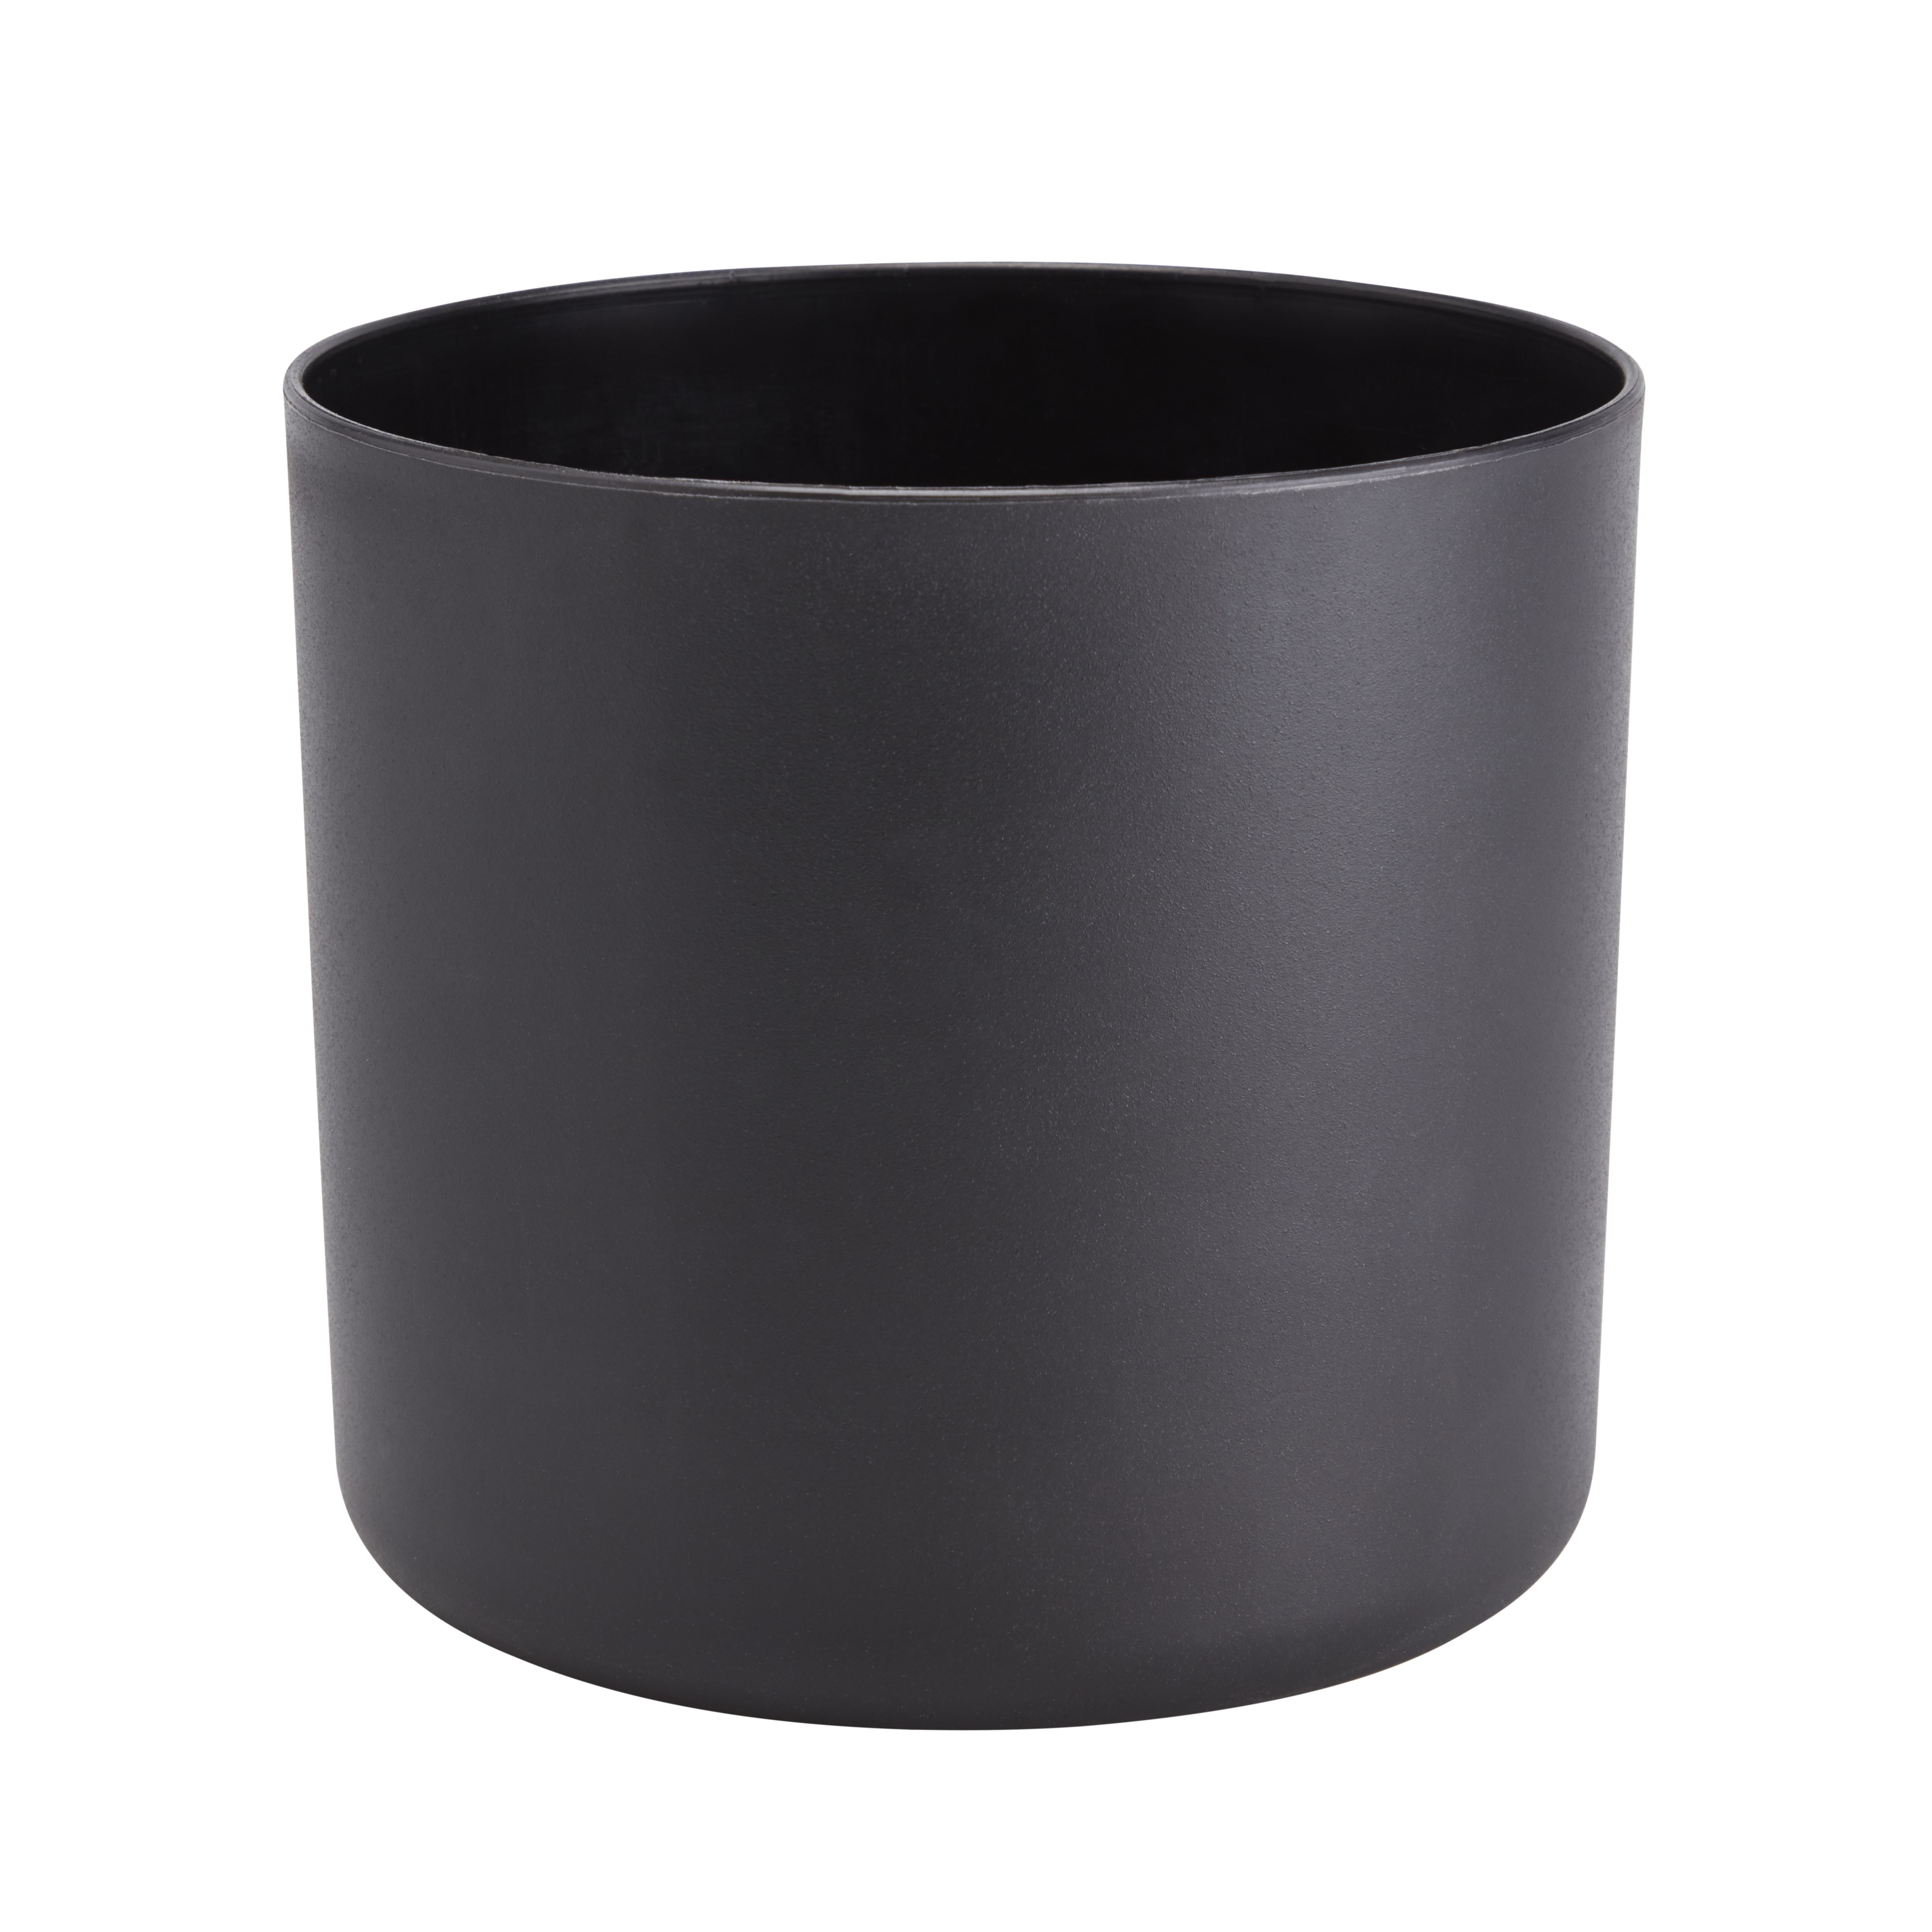 Black Plastic Circular Plant Pot Dia 20 7cm~3663602441793 02c Bq?$MOB PREV$&$width=768&$height=768